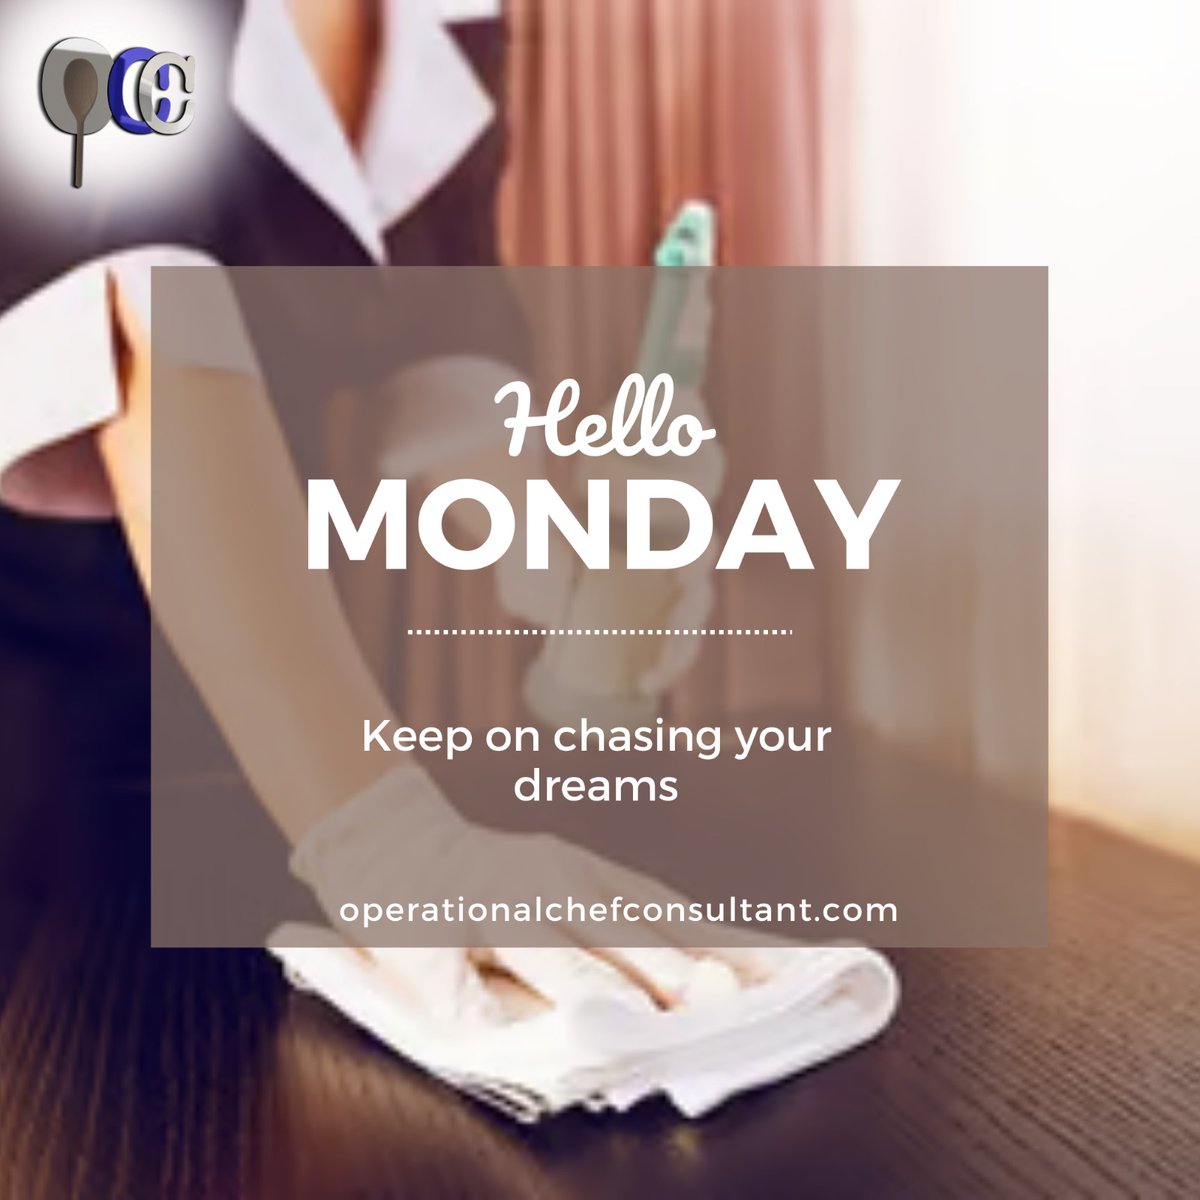 HELLO MONDAY!!!
Keep on chasing your dreams.
*
Contact Us:
☎ 03455120178
🌐operationalchefconsultant.com
*
#MondayMotivation #PositiveStarts #NewWeekEnergy
#MondaySmiles #FreshBeginnings